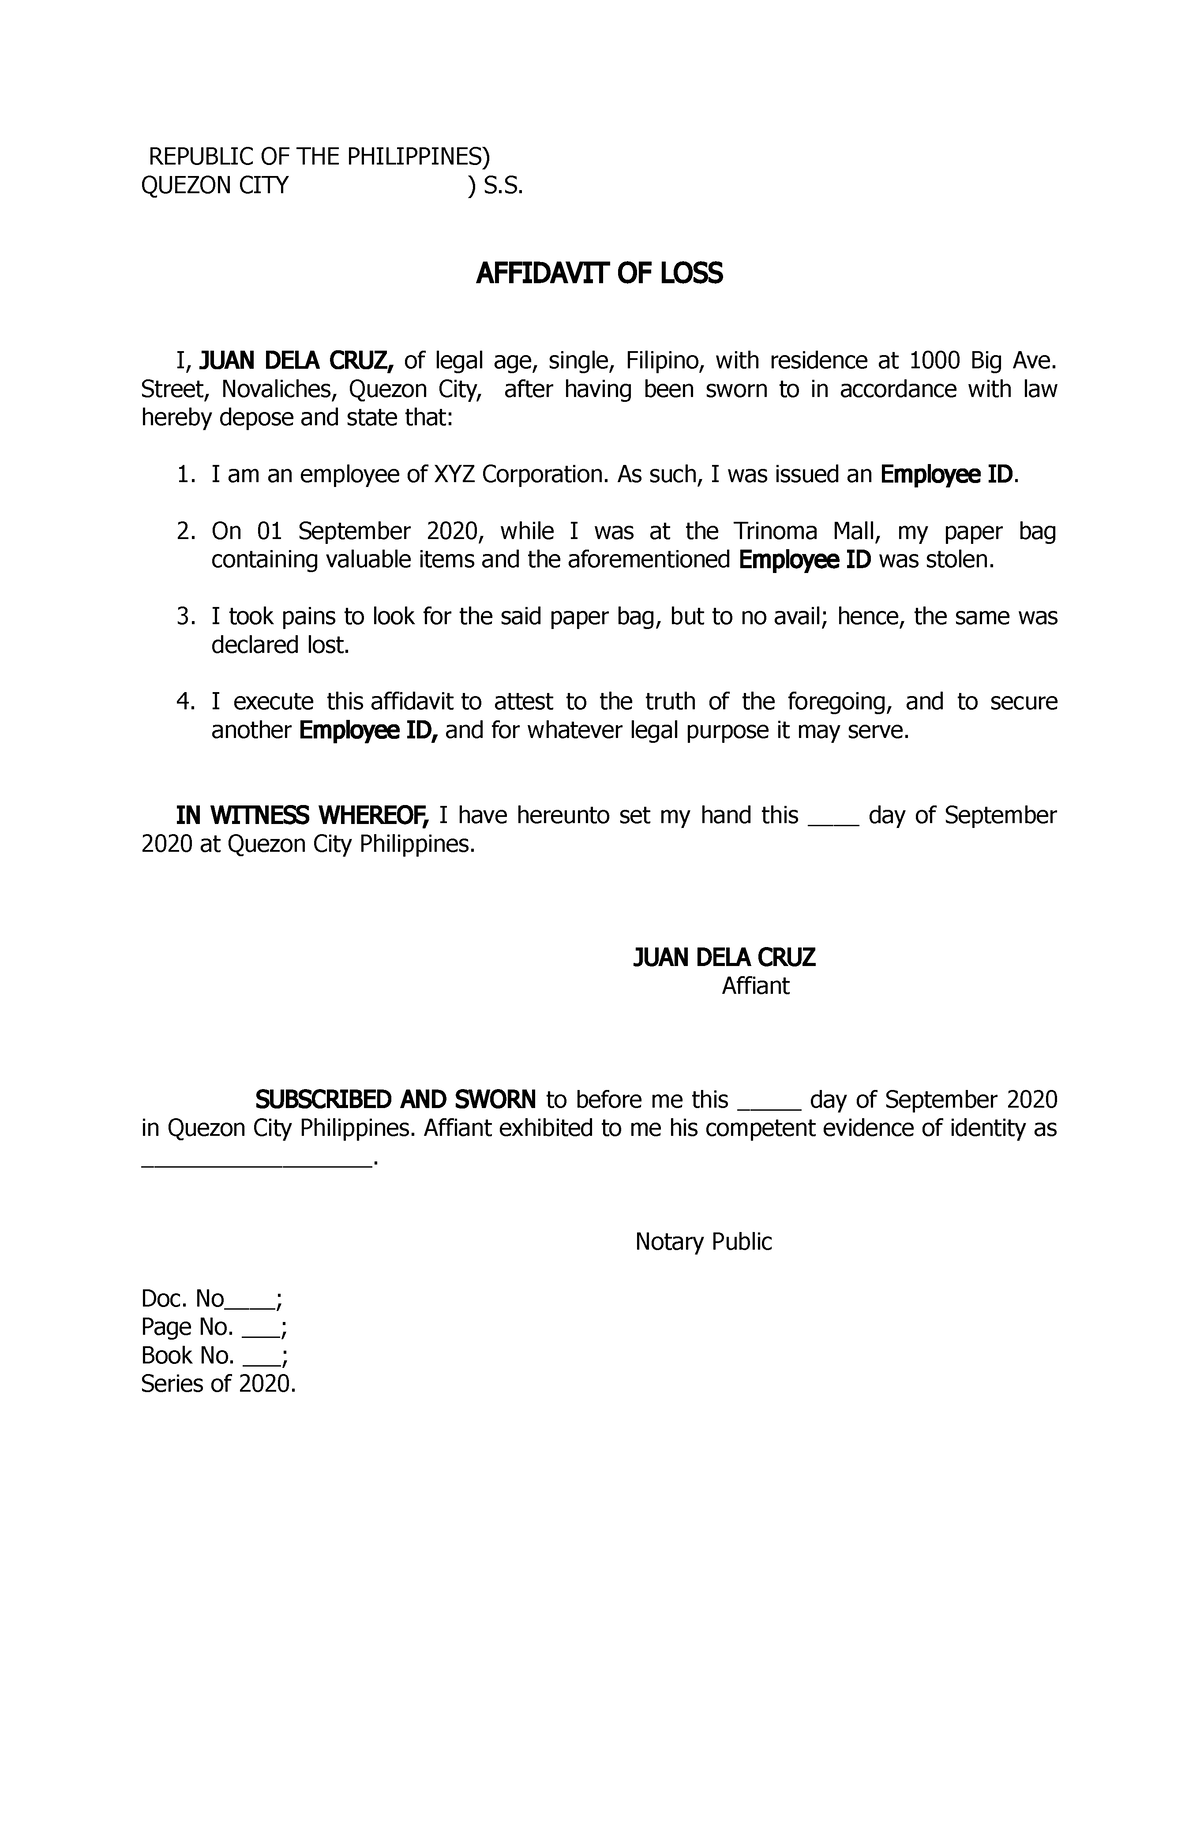 sample-affidavit-of-loss-company-id-republic-of-the-philippines-quezon-city-s-affidavit-of